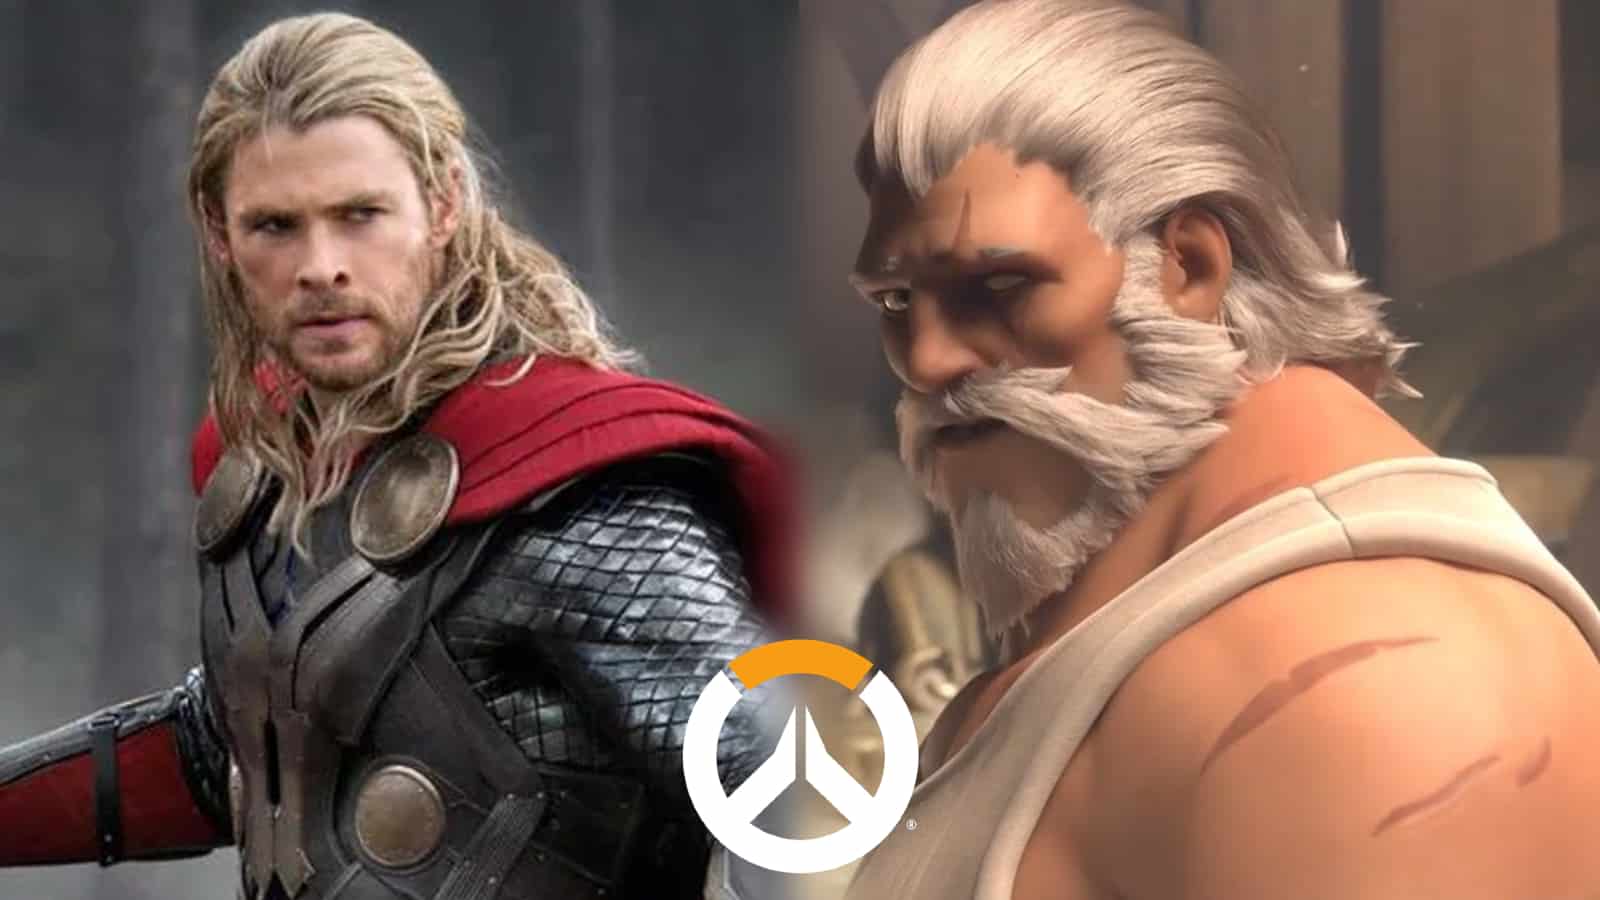 Overwatch Reinhardt next to Christ Hemsworth's Thor from Marvel Avengers